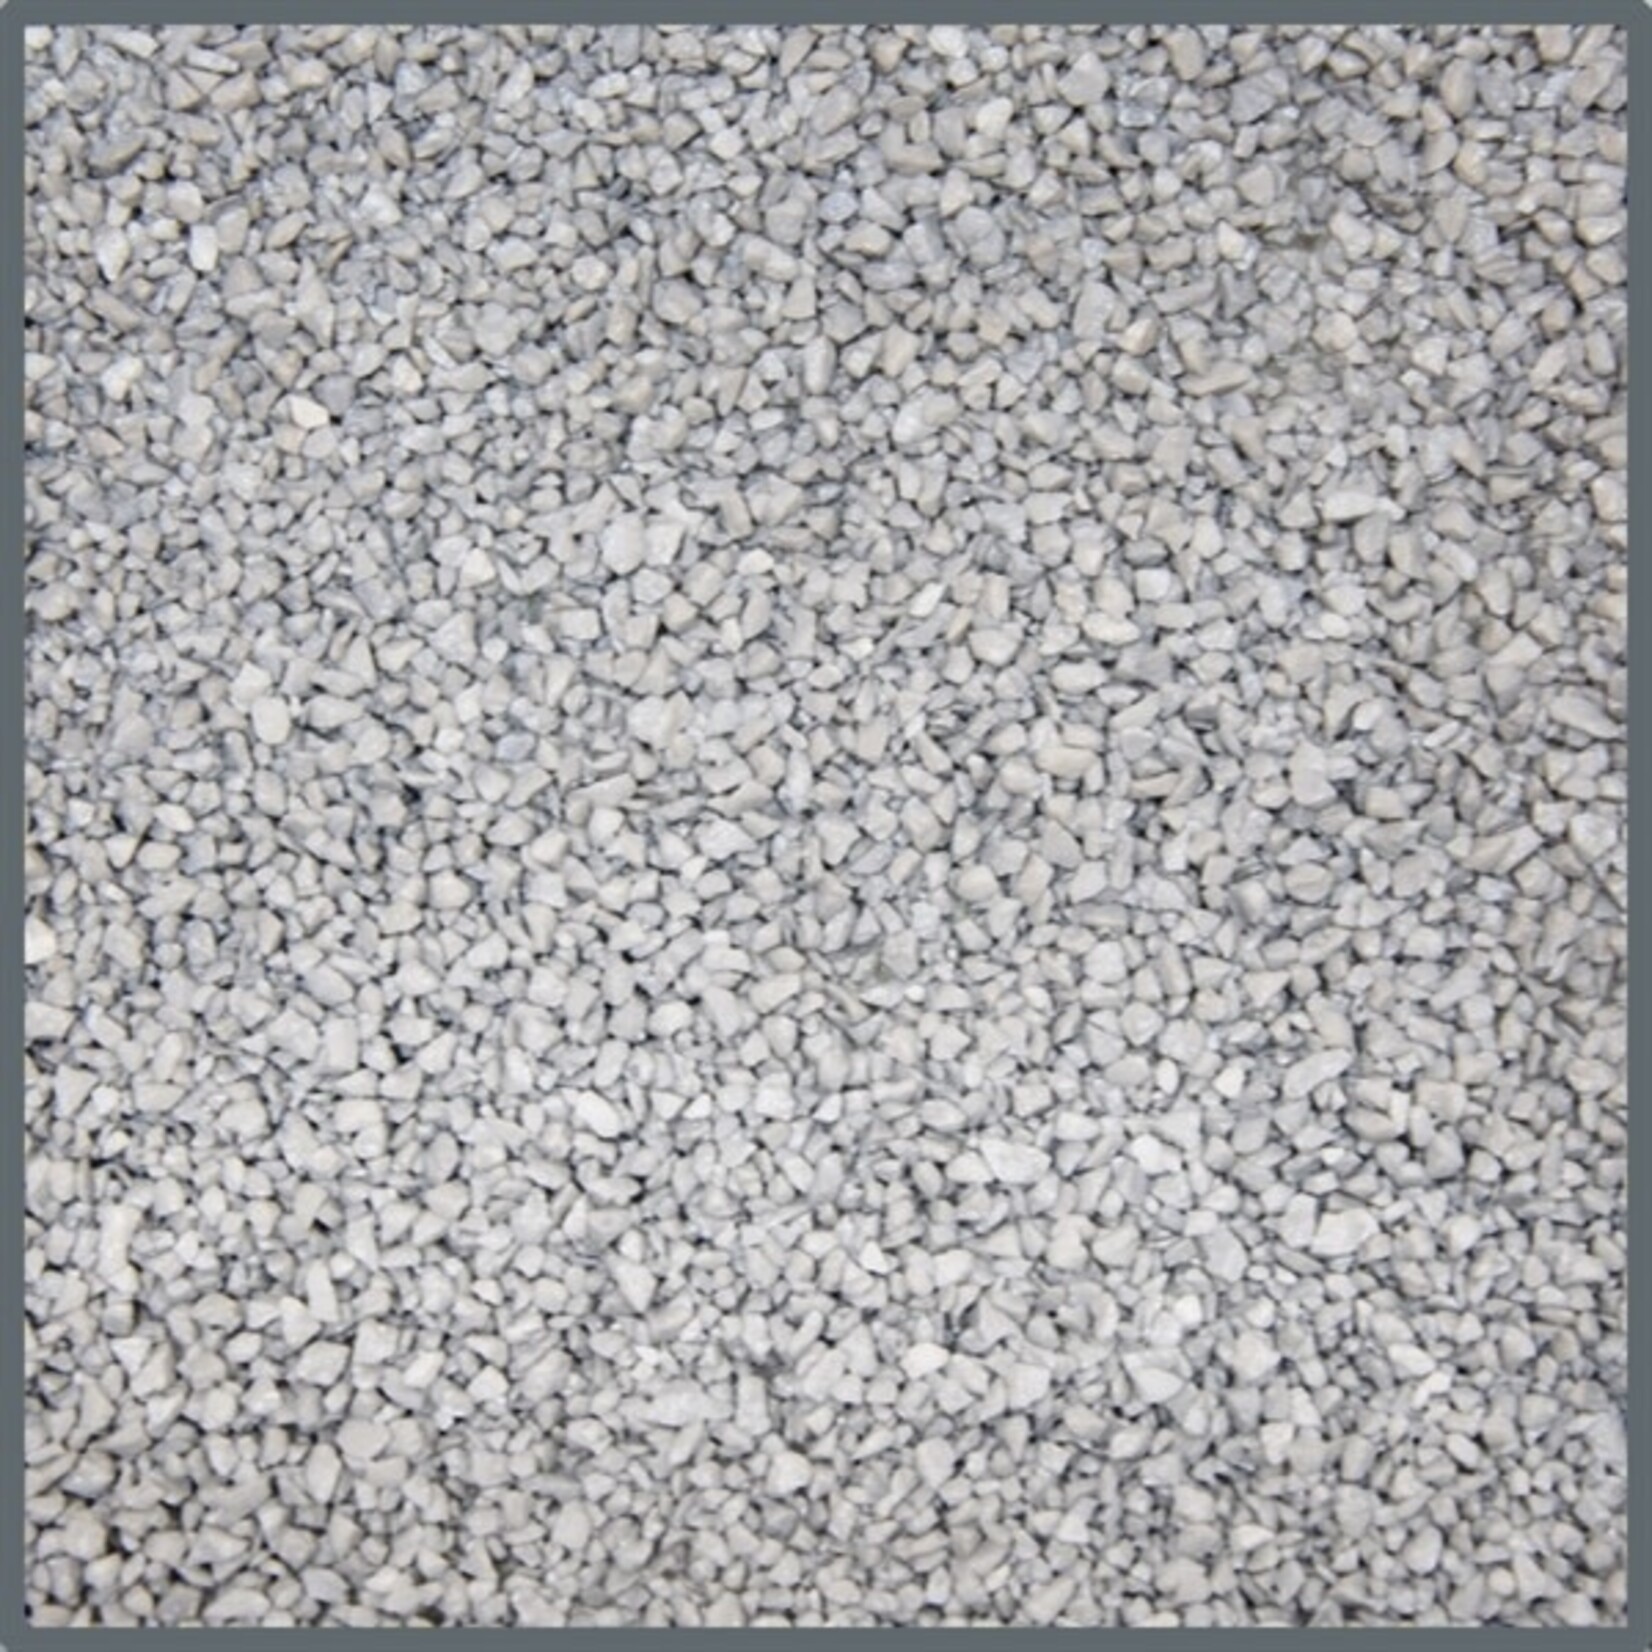 Dupla Ground colour mountain grey 1-2 mm 5 kg